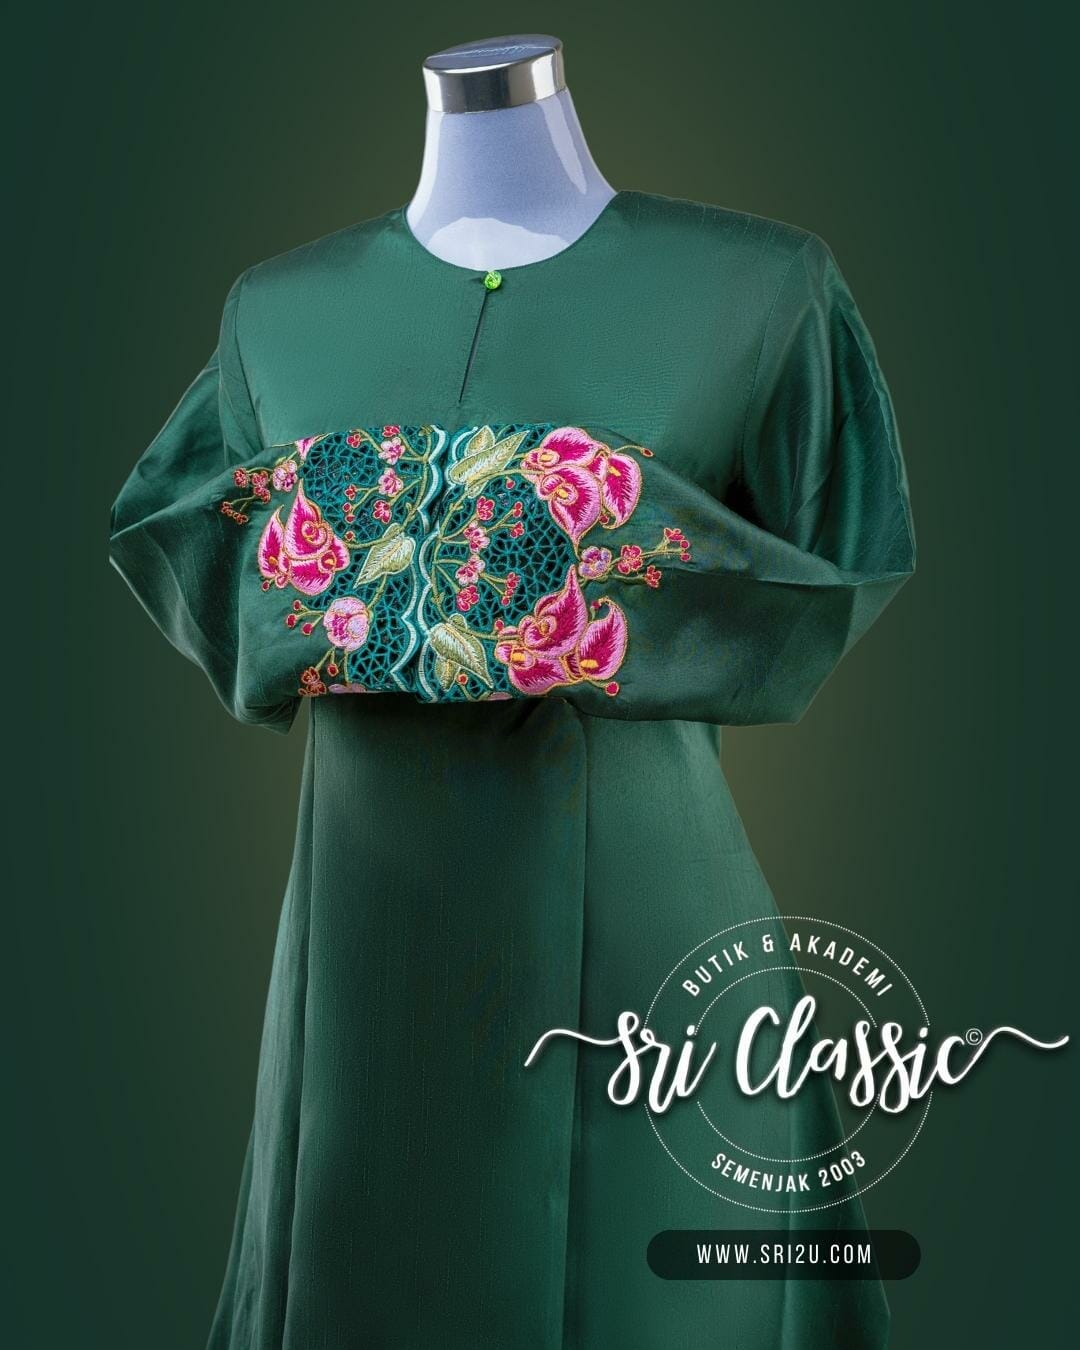 Sulam Baju Kurung Moden Princess Cut Motif Bunga Sakura Dan Lily Clara: Keanggunan dan Keunikan Sulaman Goyang Kerawang di Butik Sri Classic